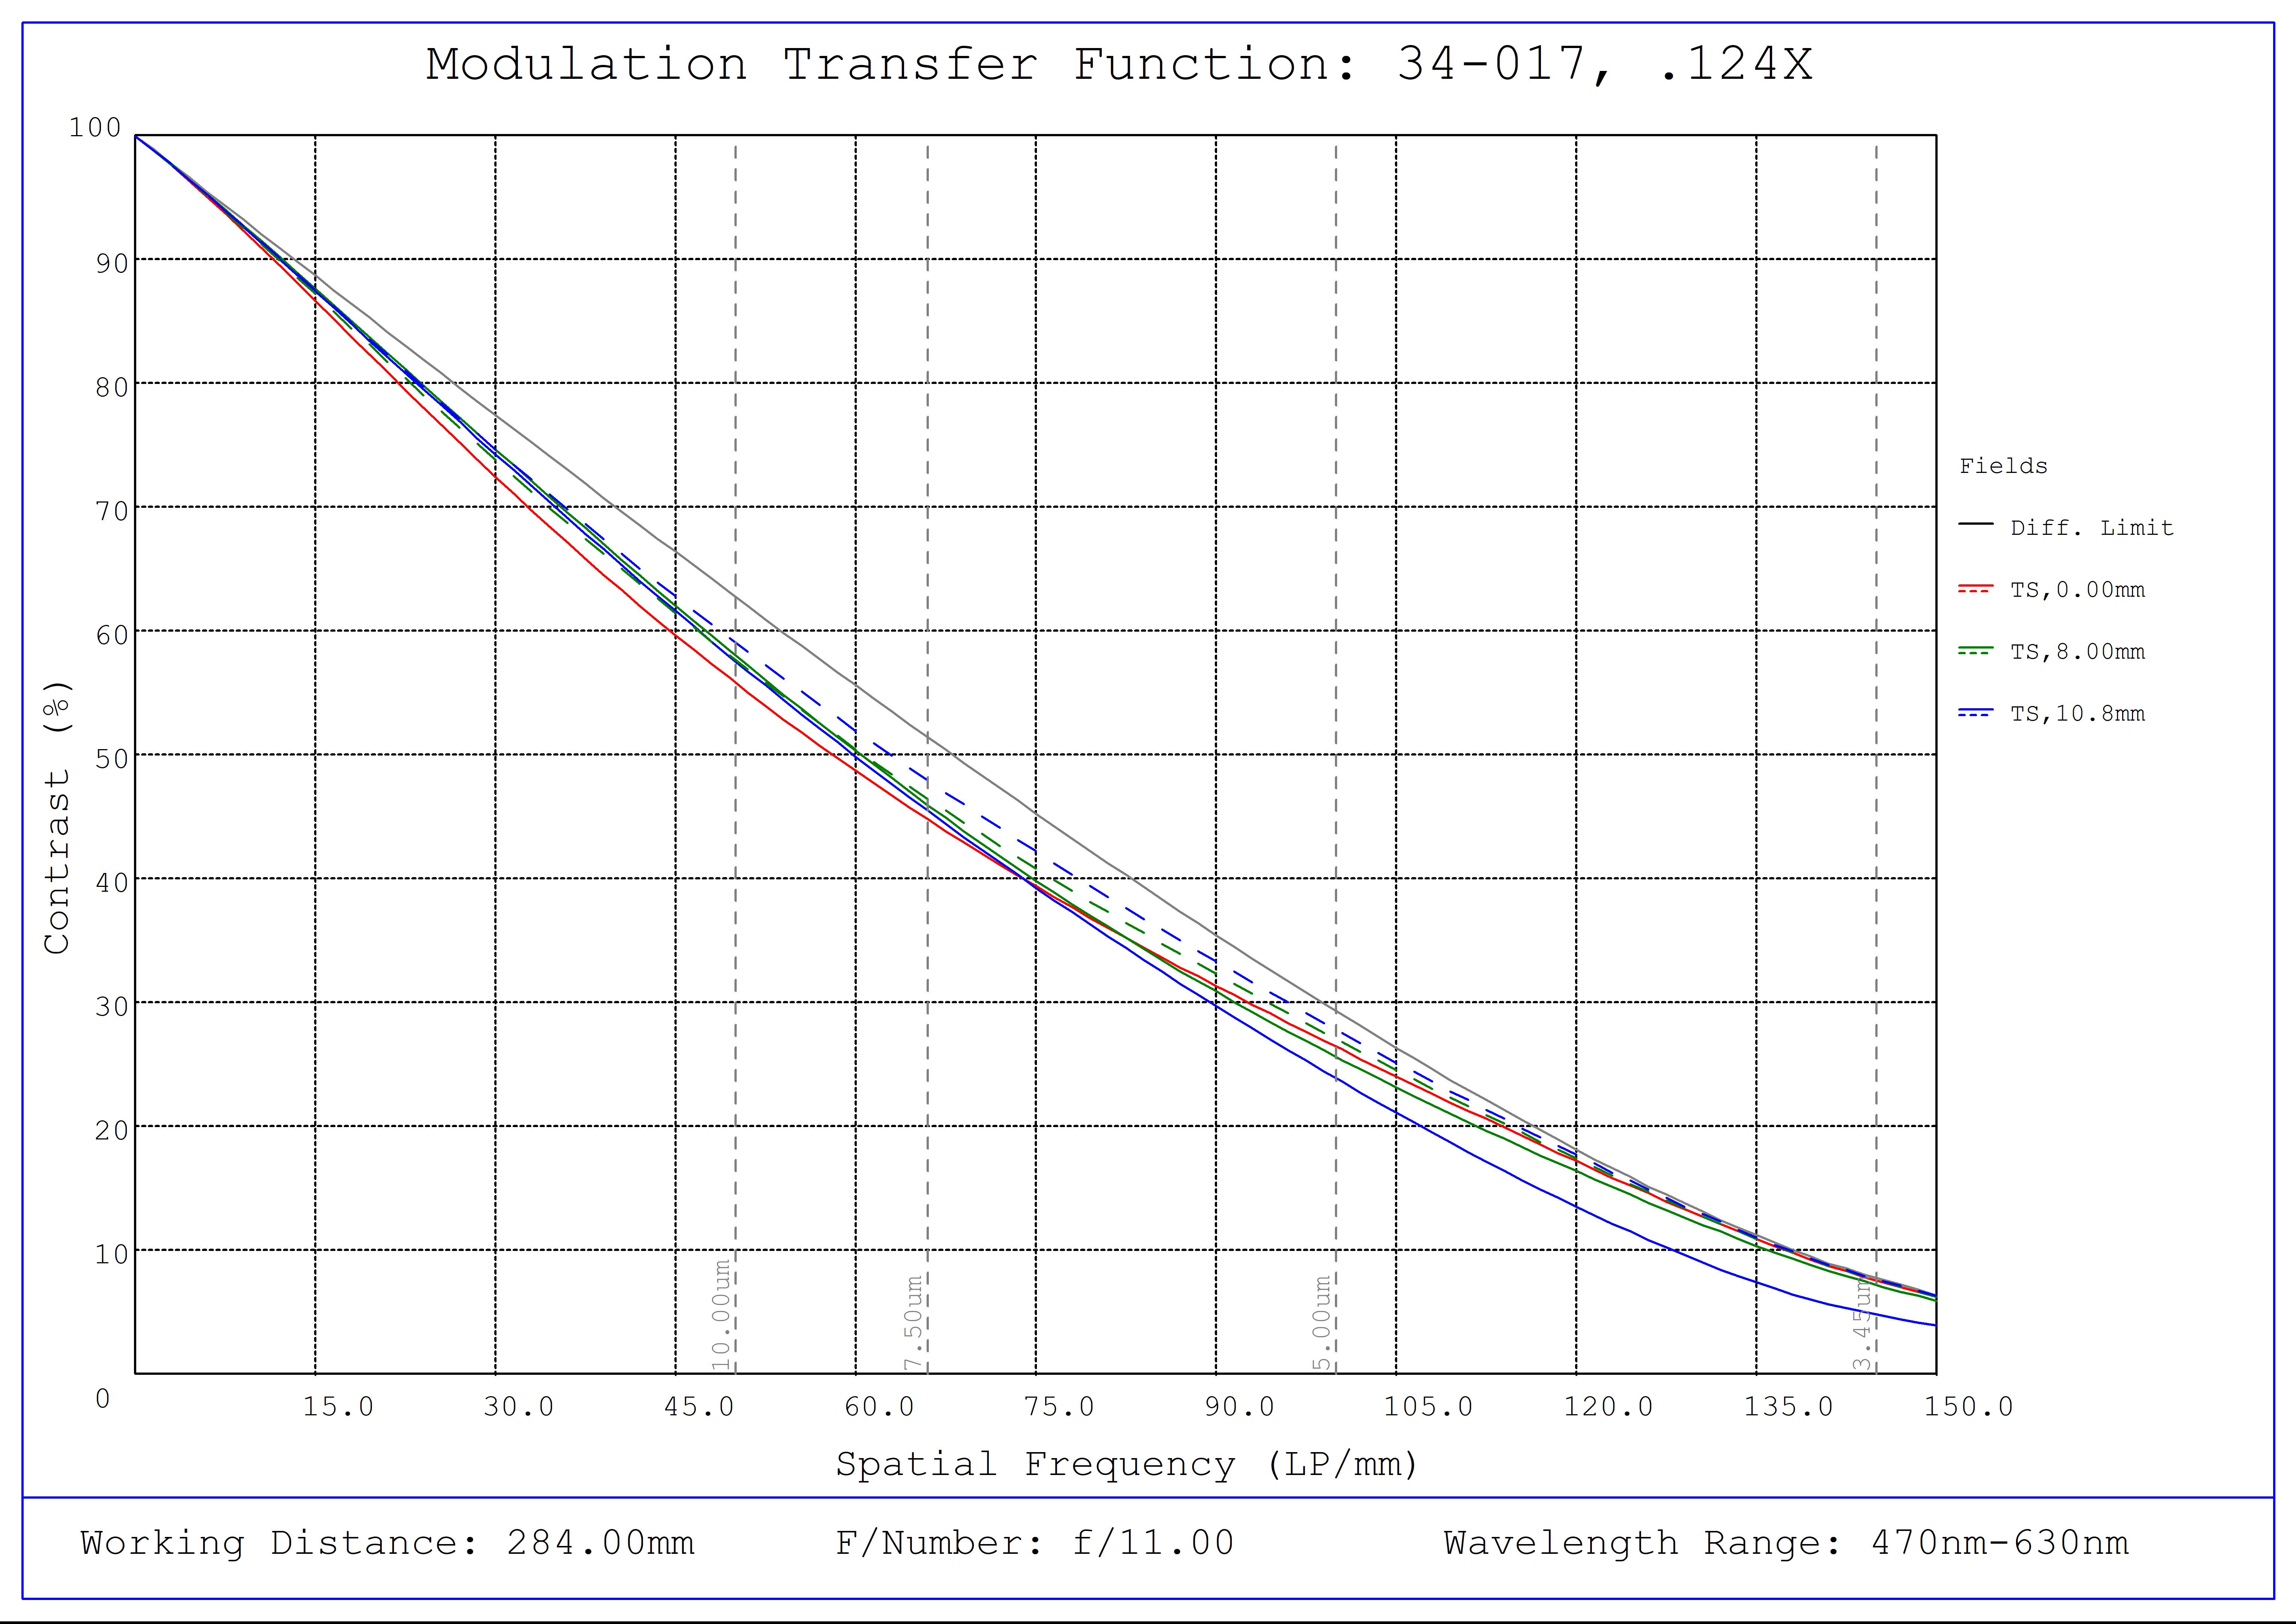 #34-017, 0.124X, 4/3" C-Mount TitanTL® Telecentric Lens, Modulated Transfer Function (MTF) Plot, 284mm Working Distance, f11